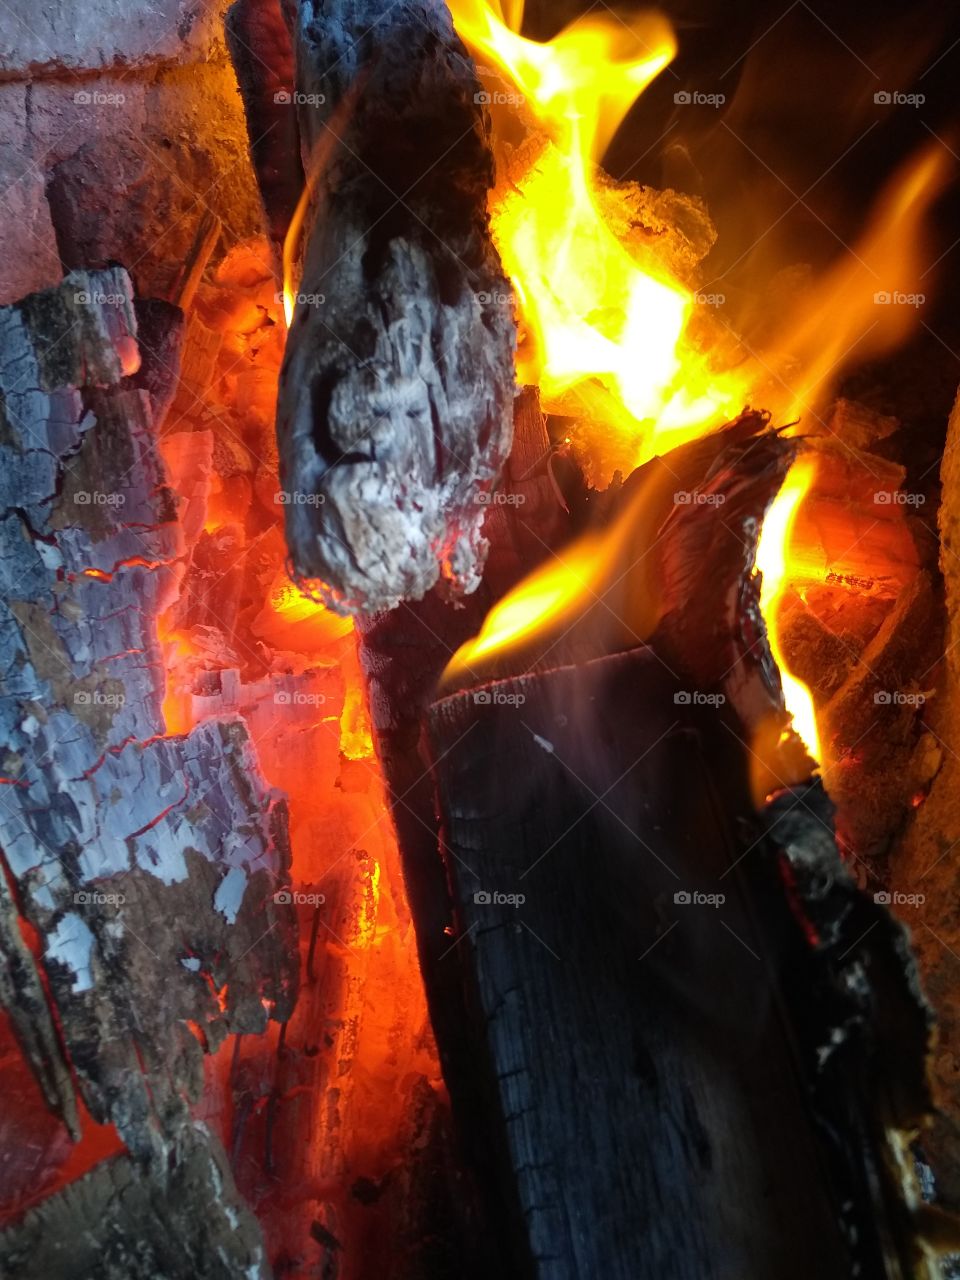 Fire of the wood stove...Chama do fogão a lenha...